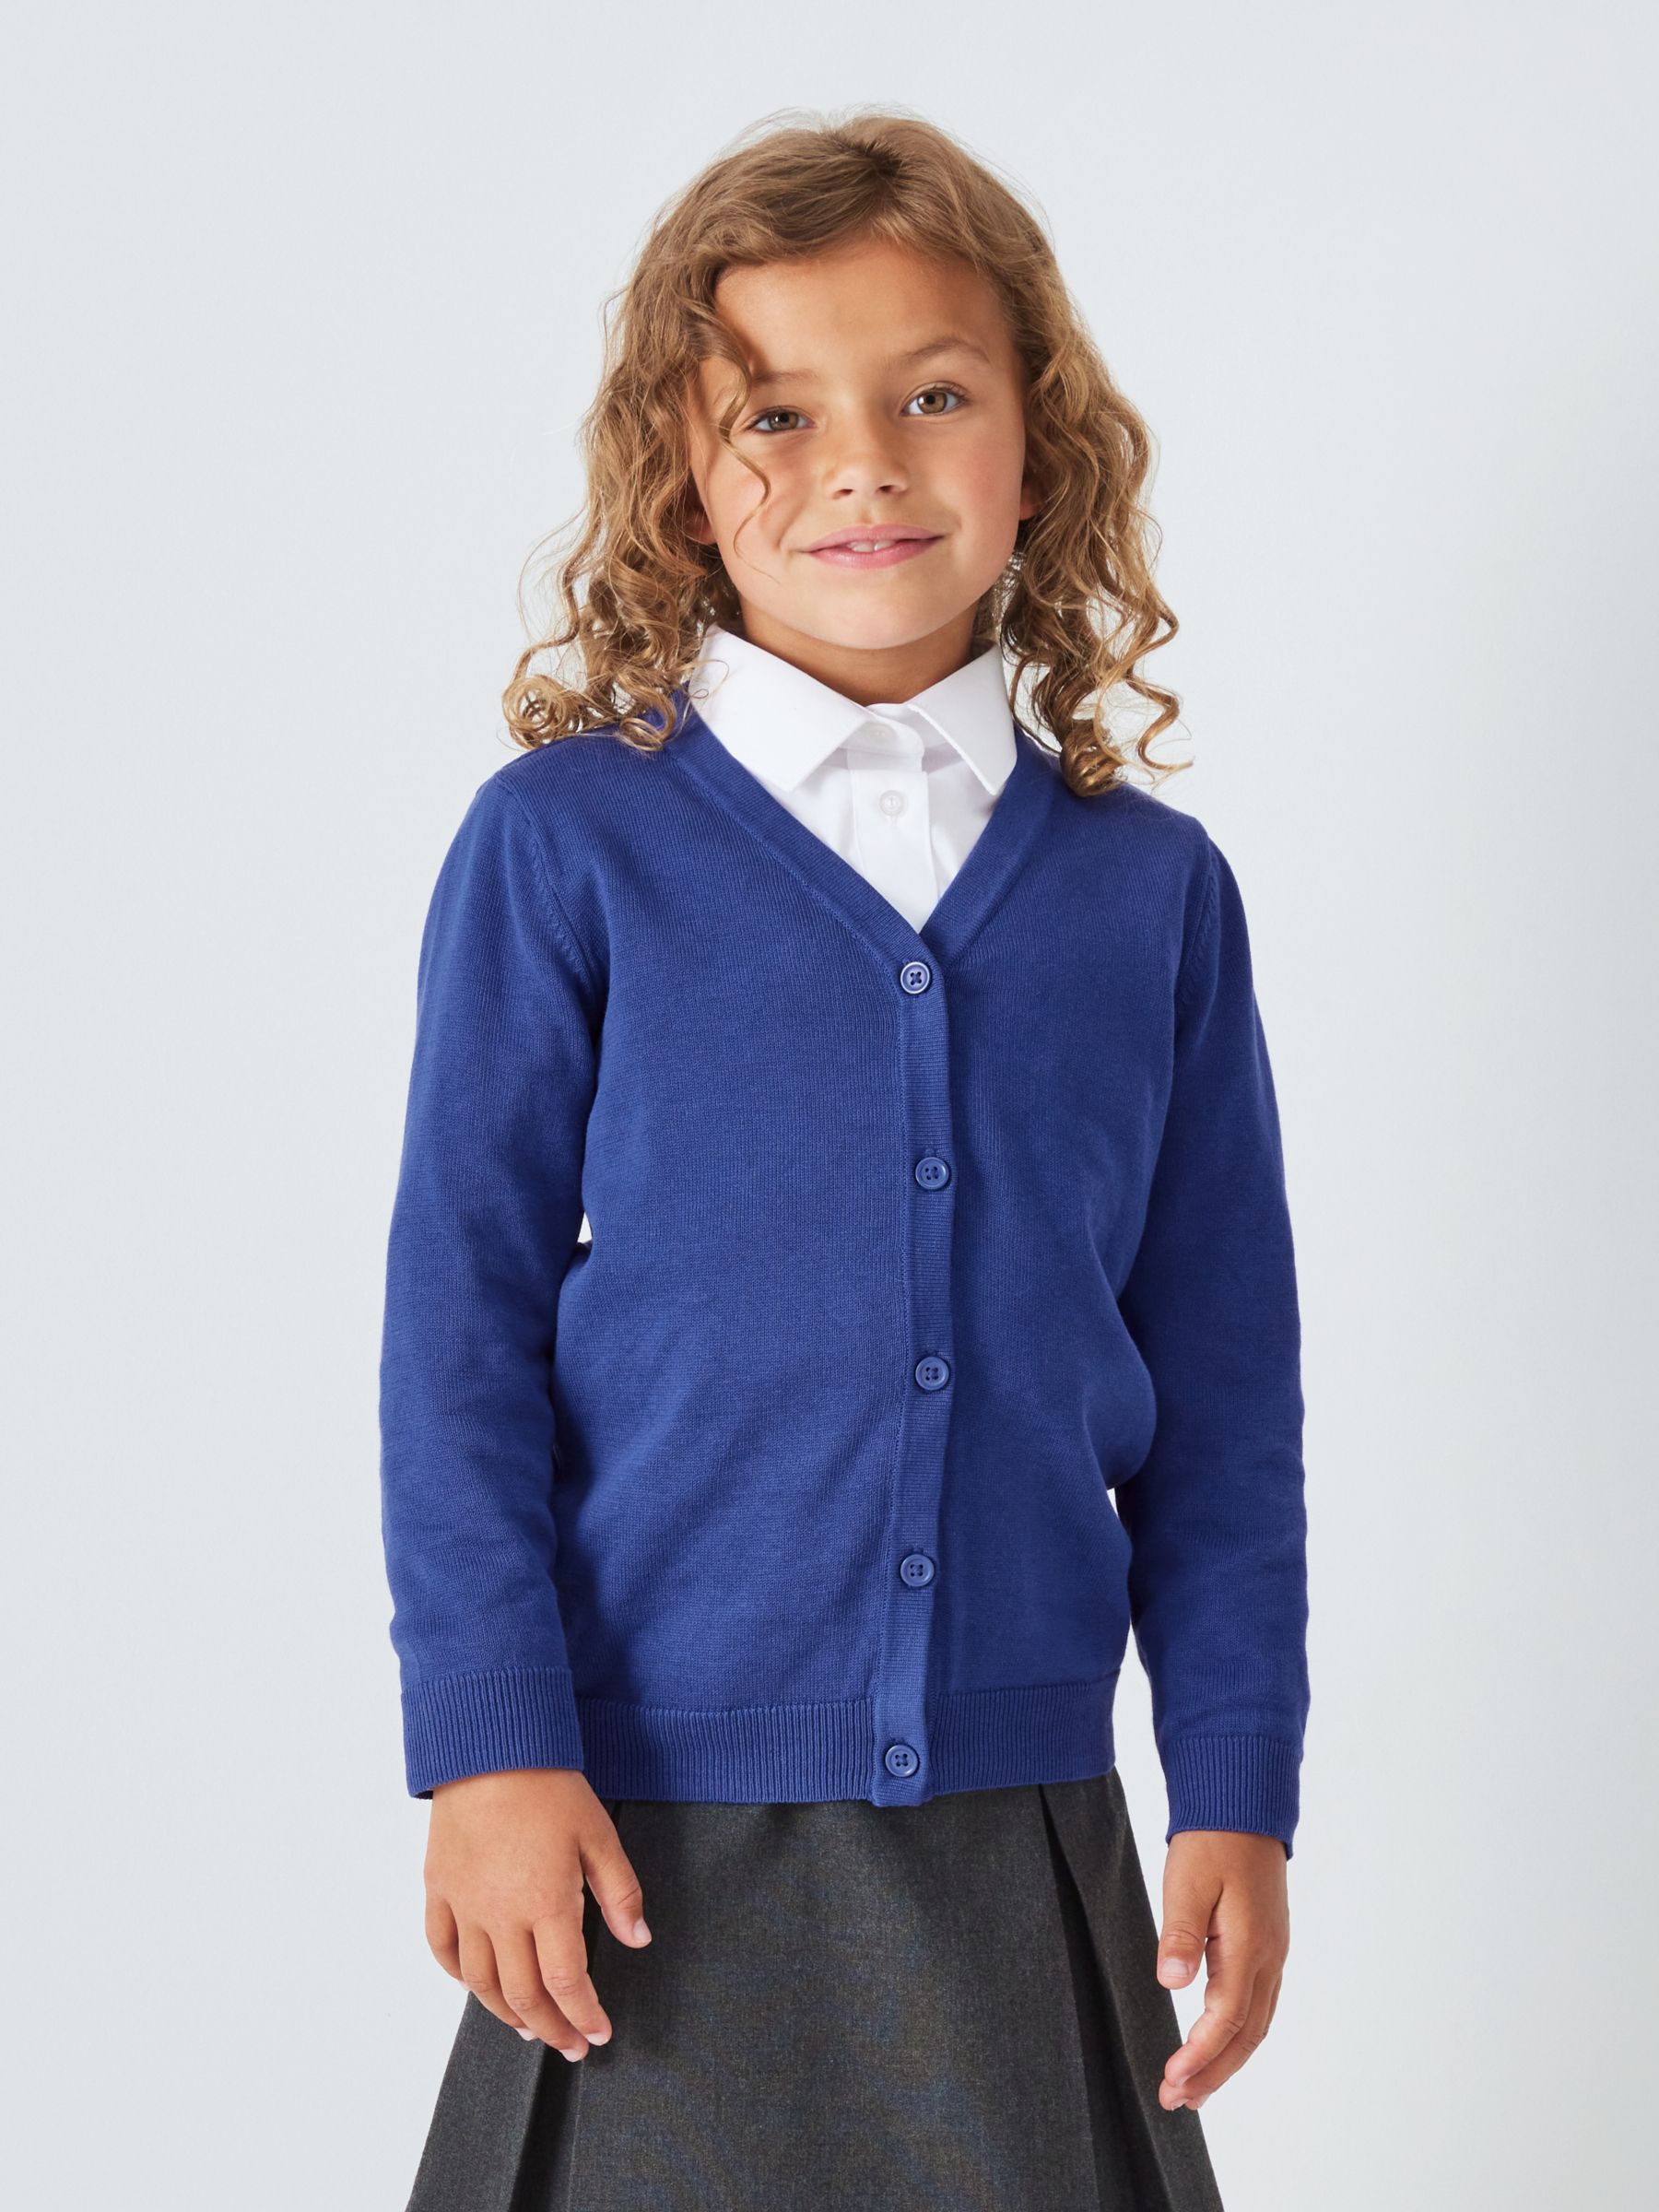 Buy John Lewis ANYDAY Unisex Cotton School Cardigan, Pack of 2 Online at johnlewis.com